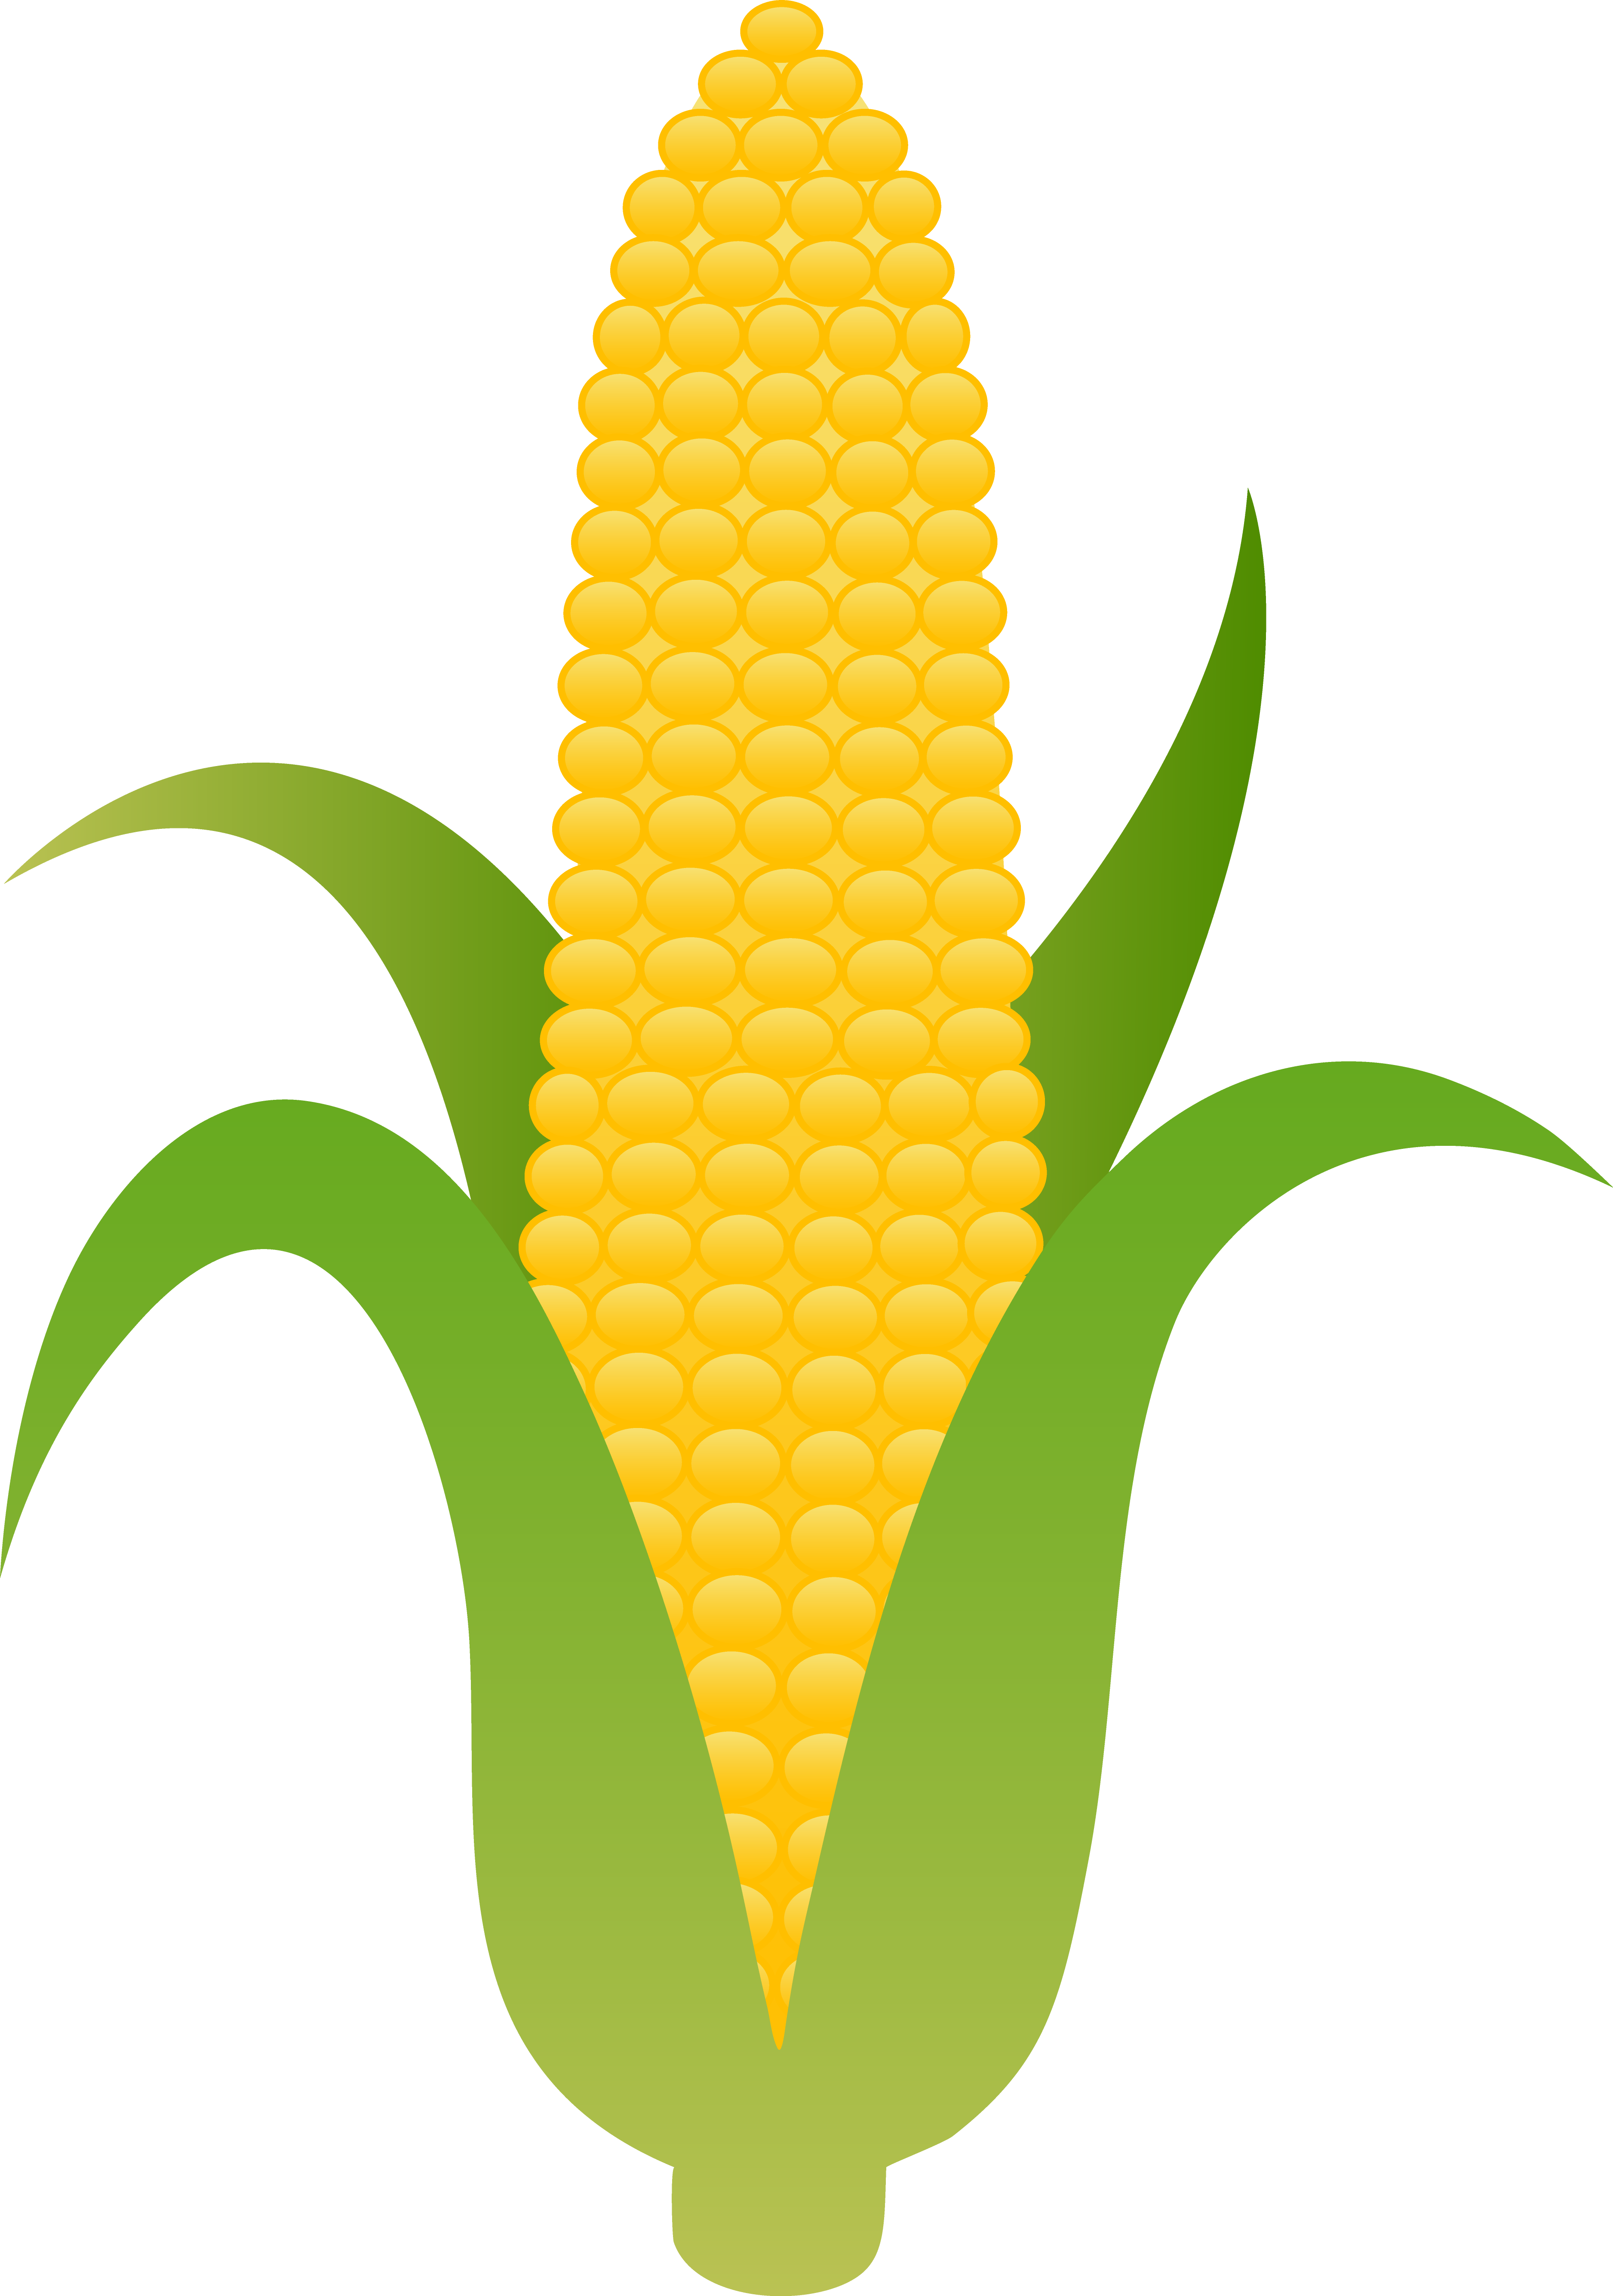 Corn On The Cob Image